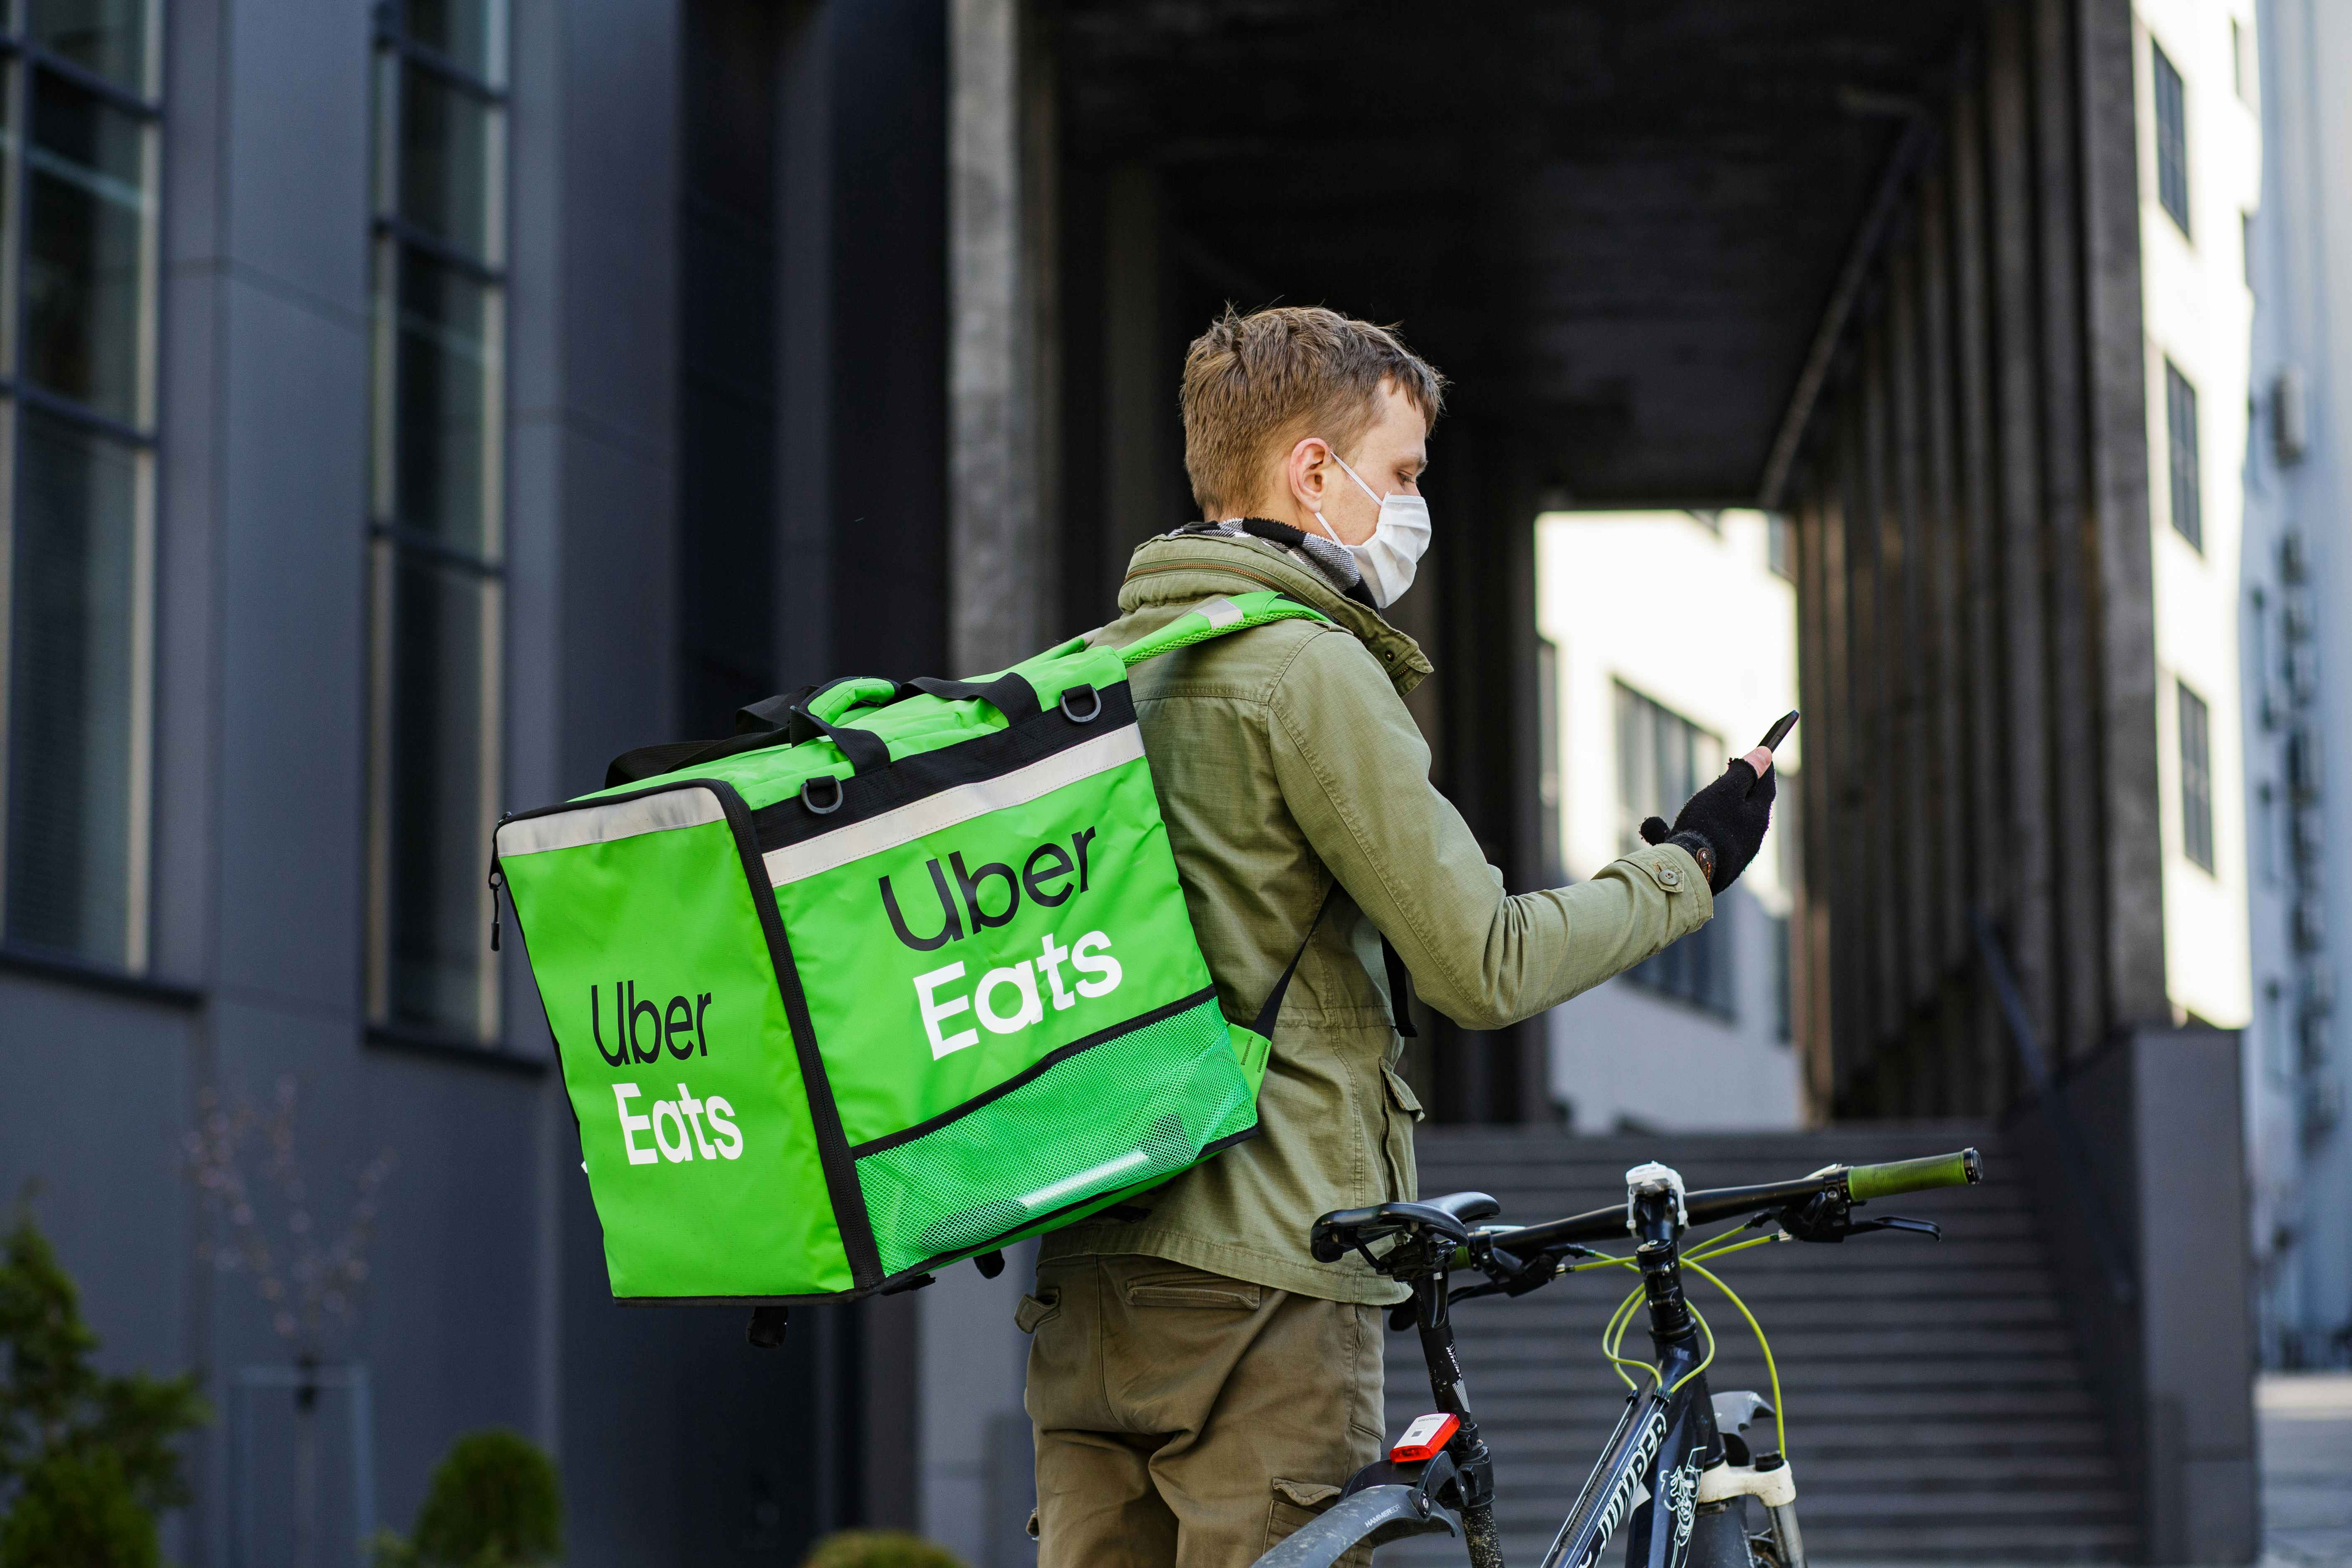 masked uber eats delivery person parking bike to deliver an order